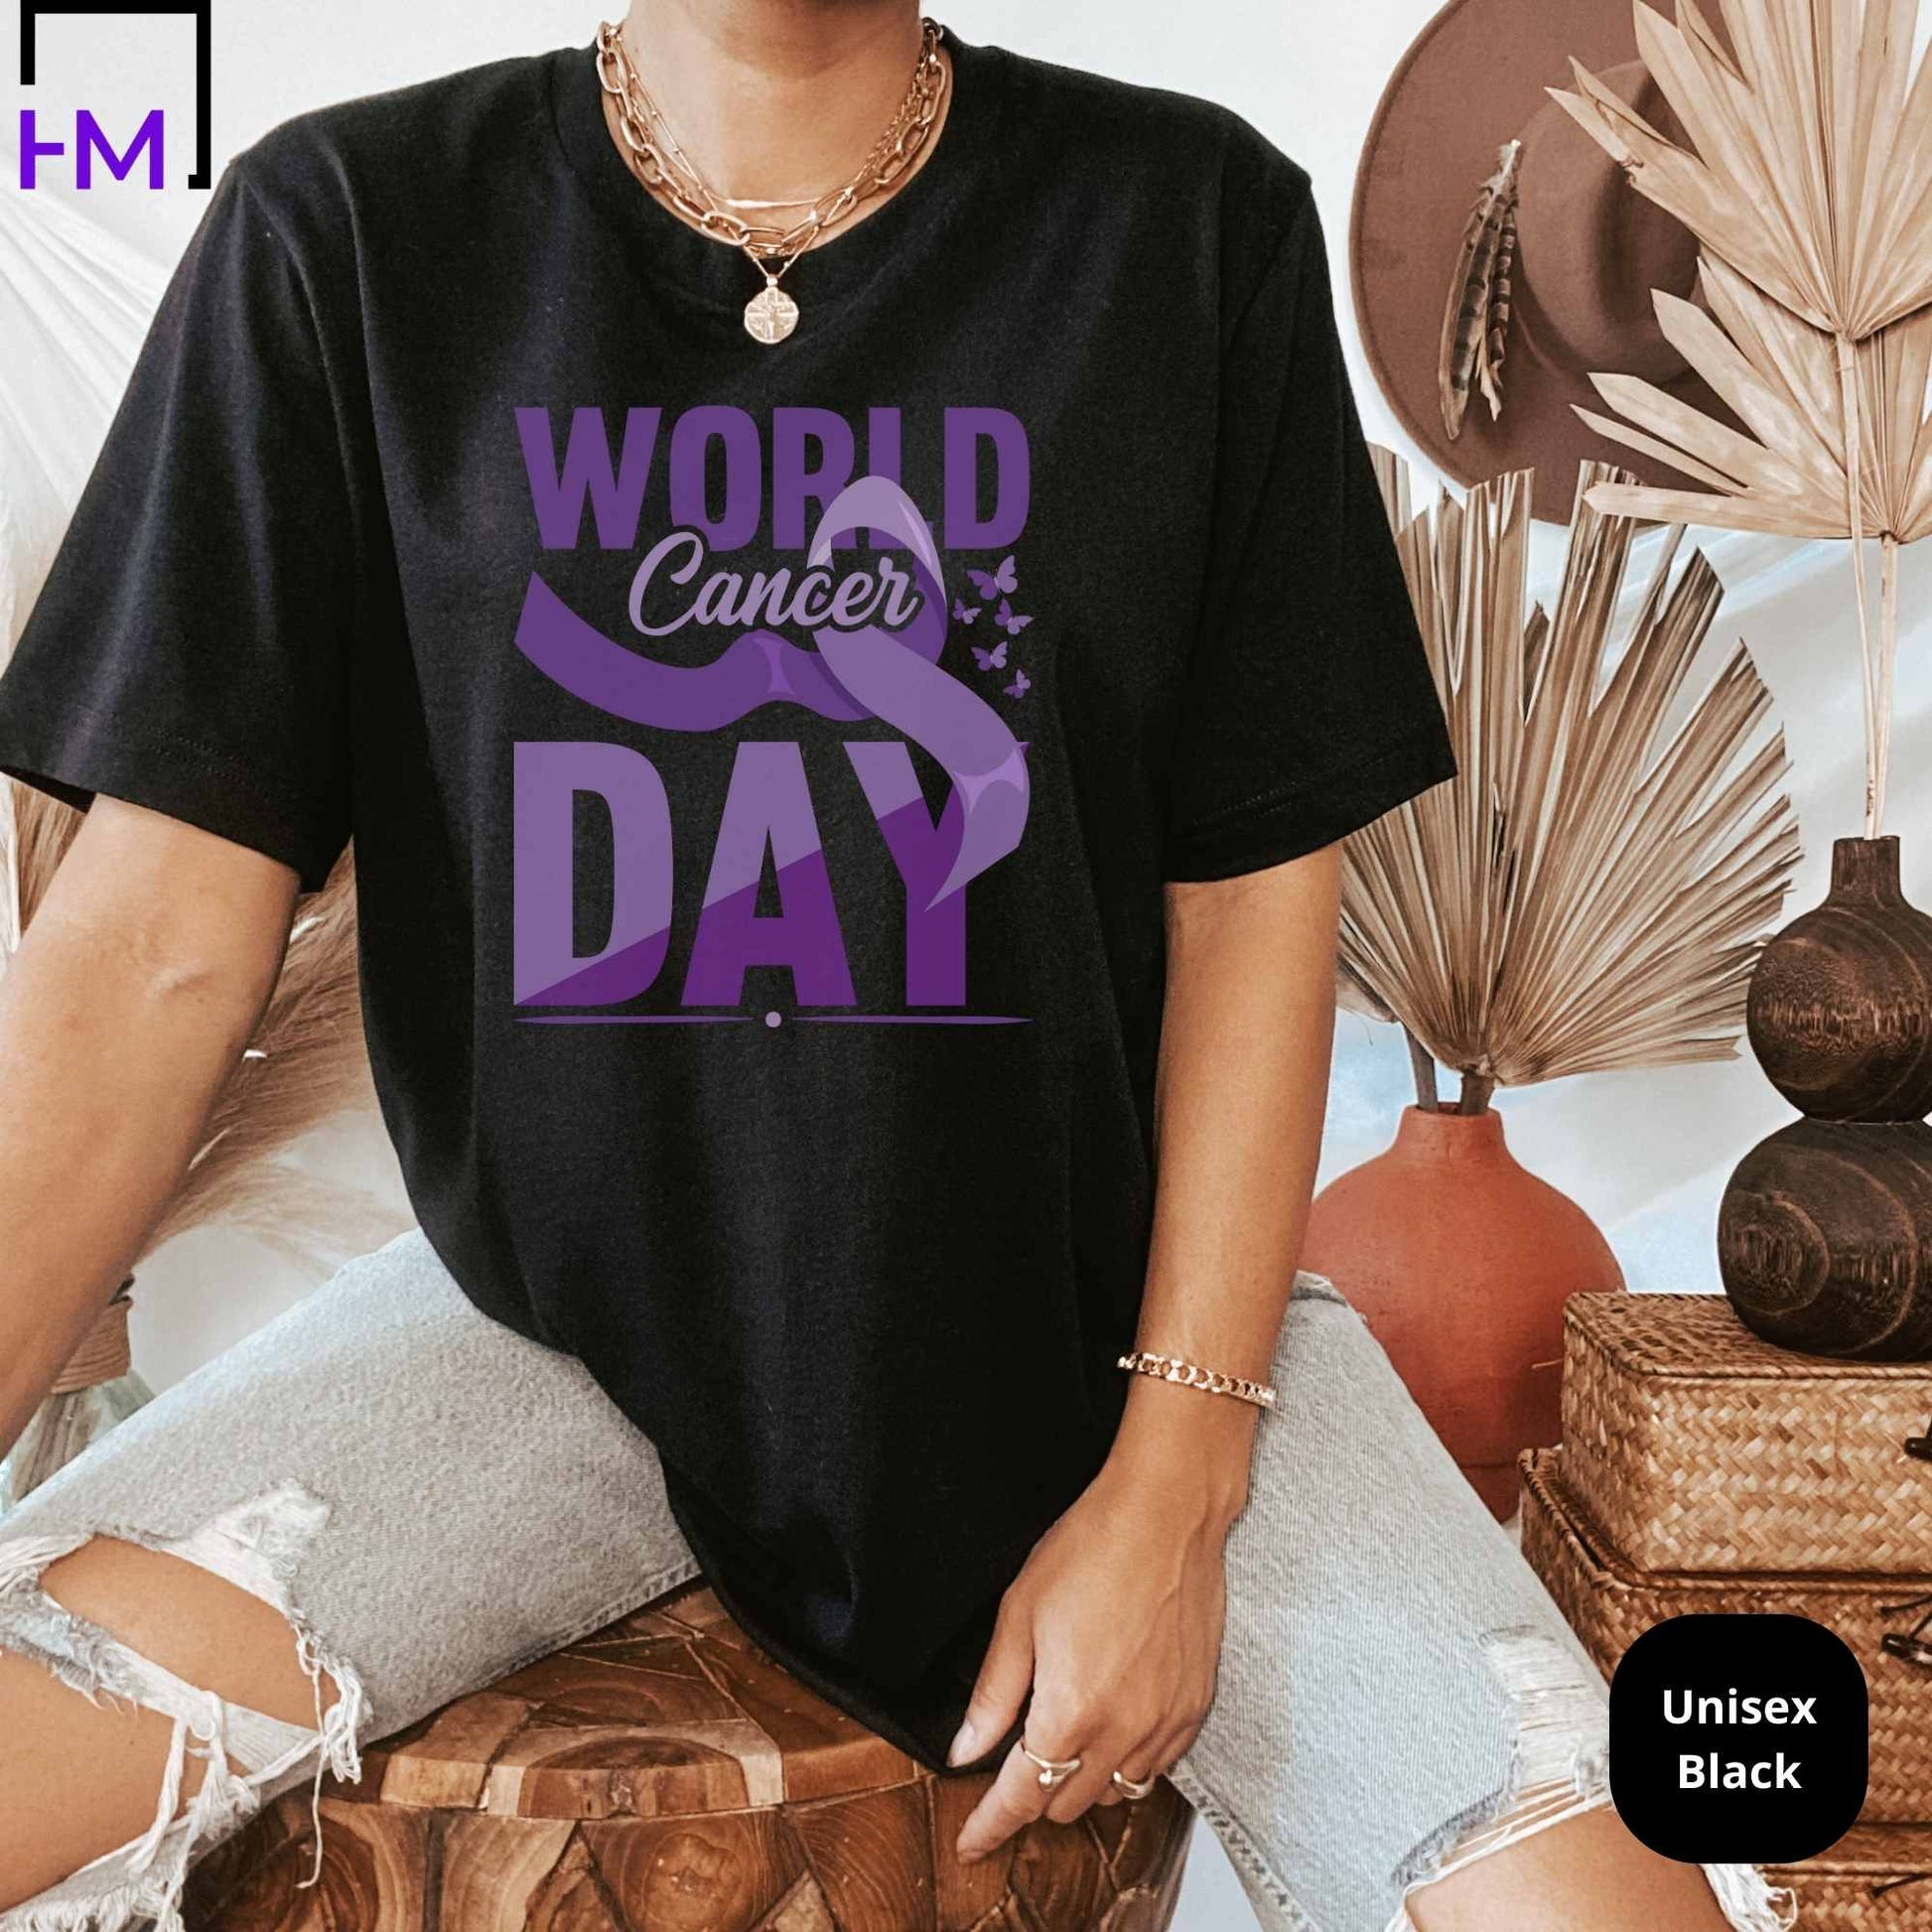 World Cancer Day Shirt, Fight Cancer, Cancer Awareness Gift, Cancer Ribbon Tee, Cancer Survivor Sweater, Pink Cancer Support Sweatshirt